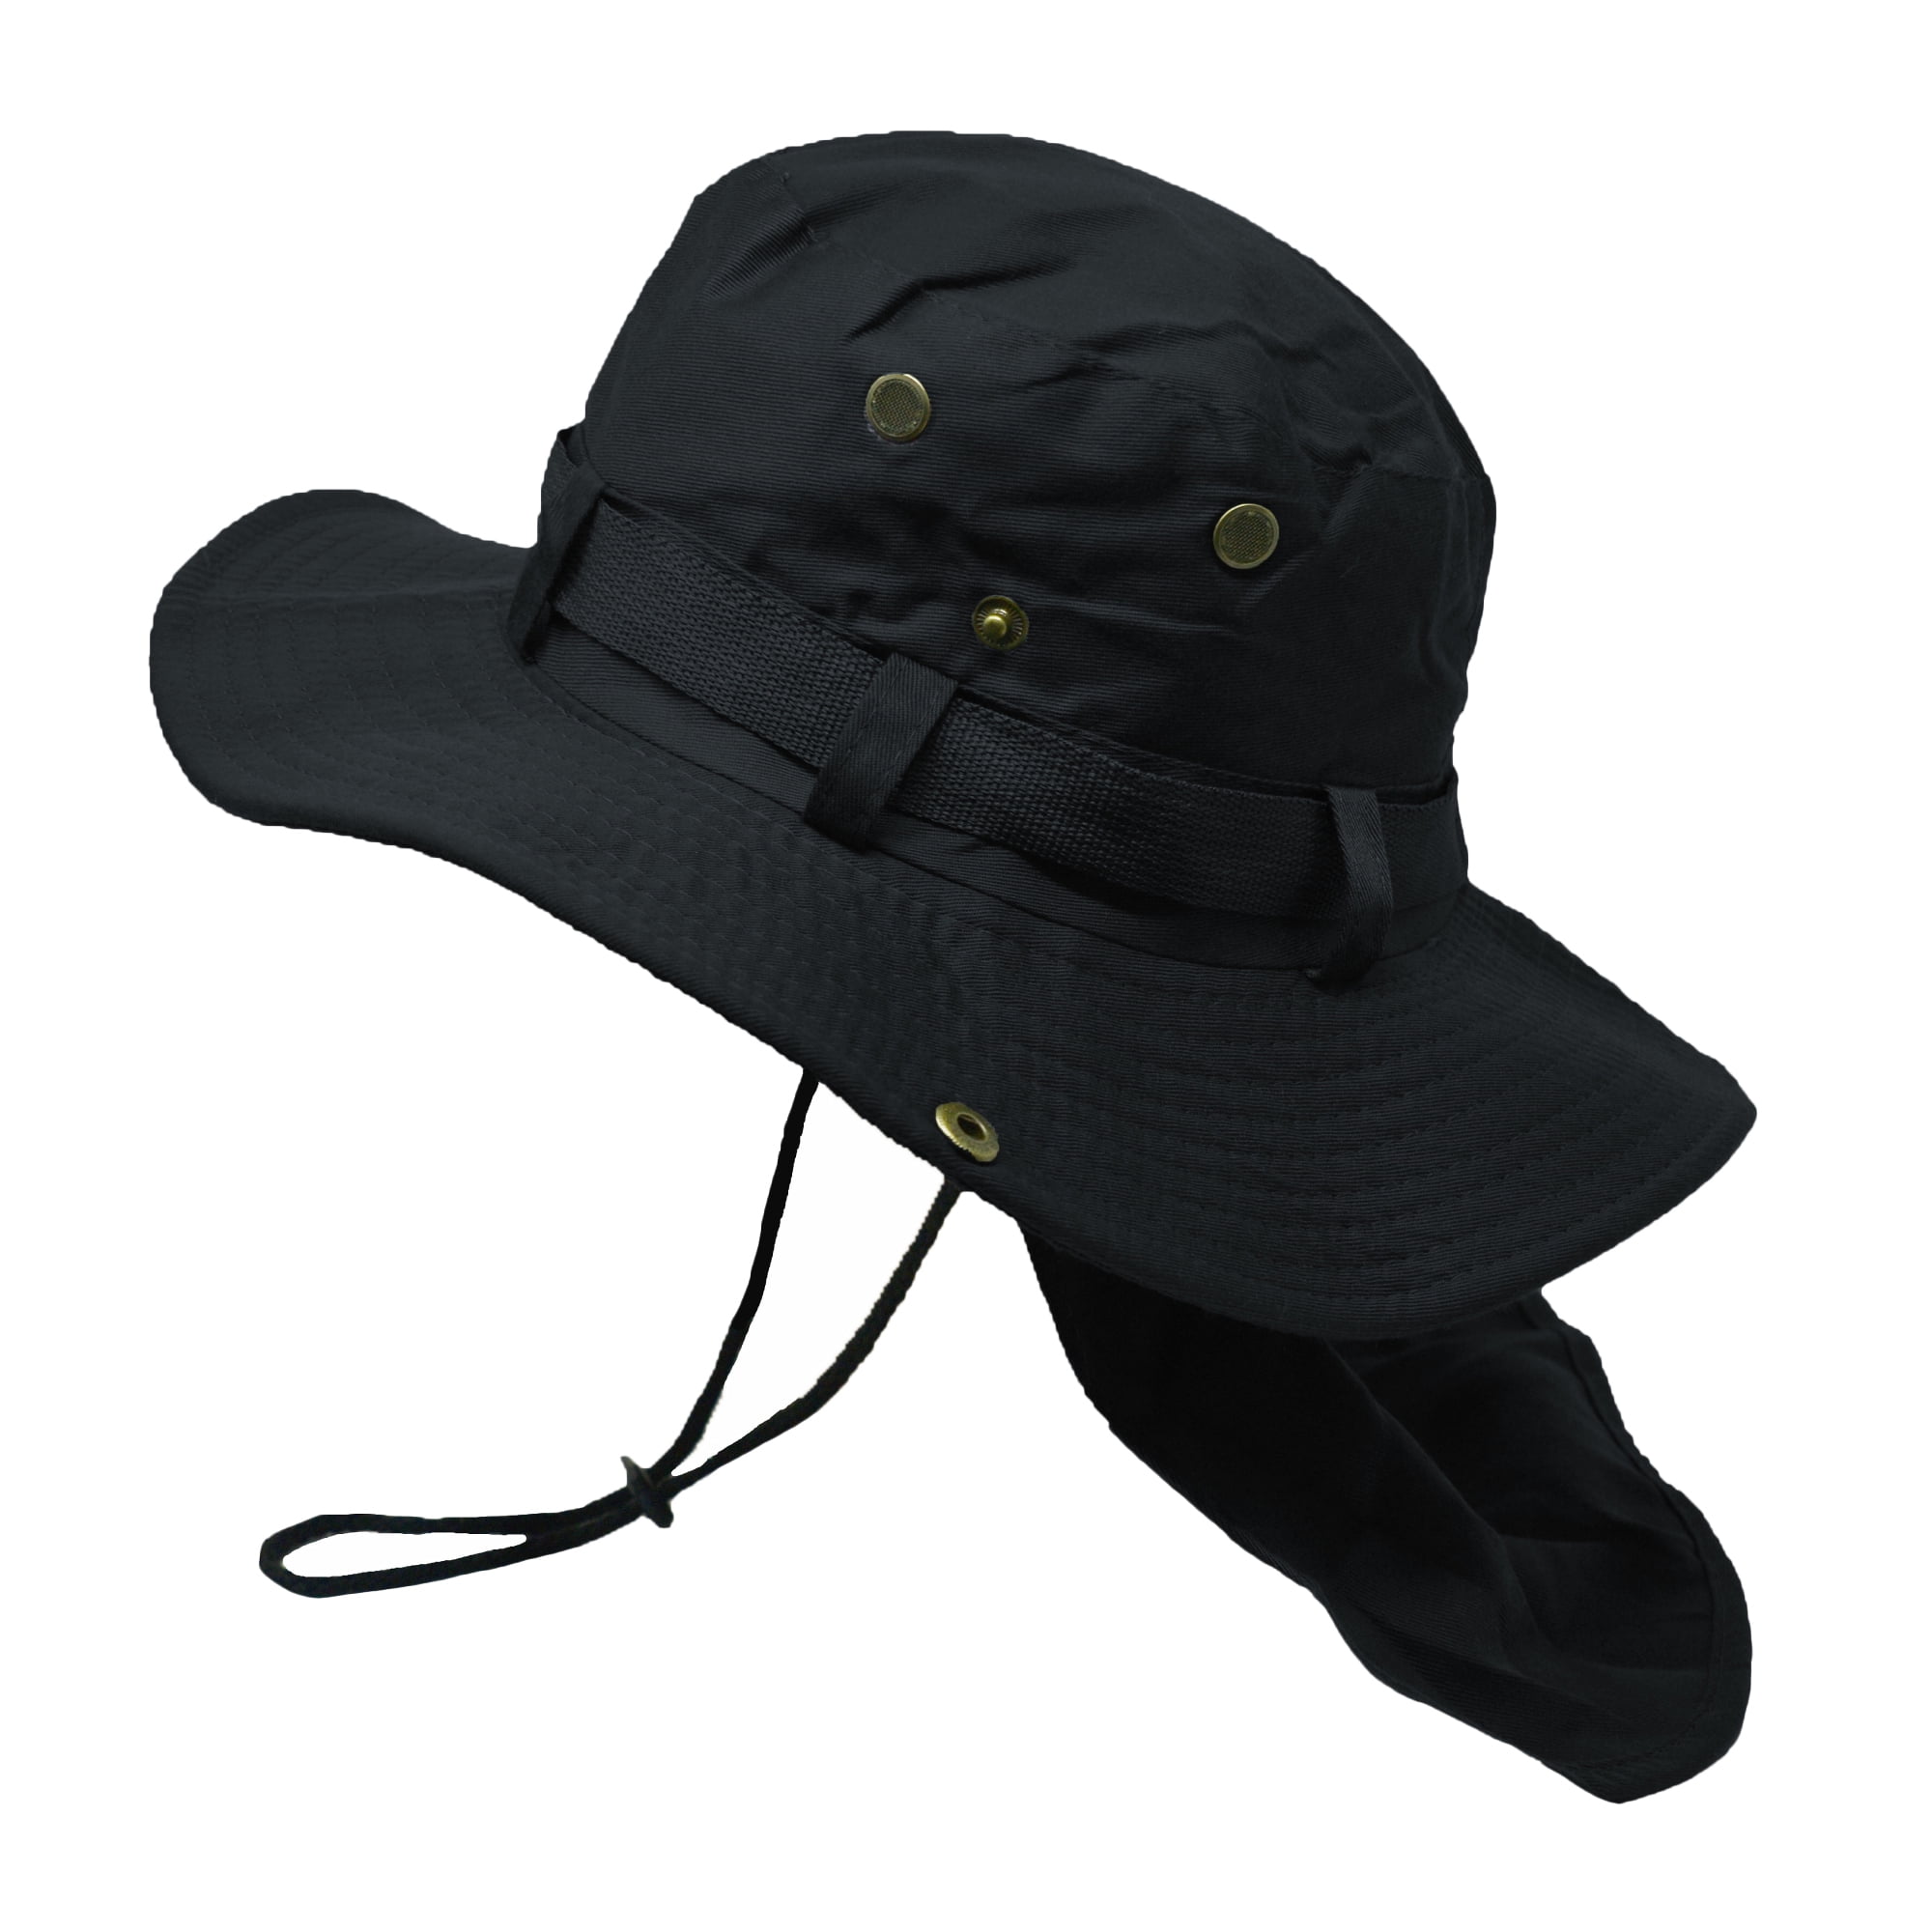 Scipio Bucket Hat - Adjustable Military-style Boonie Hat - Black